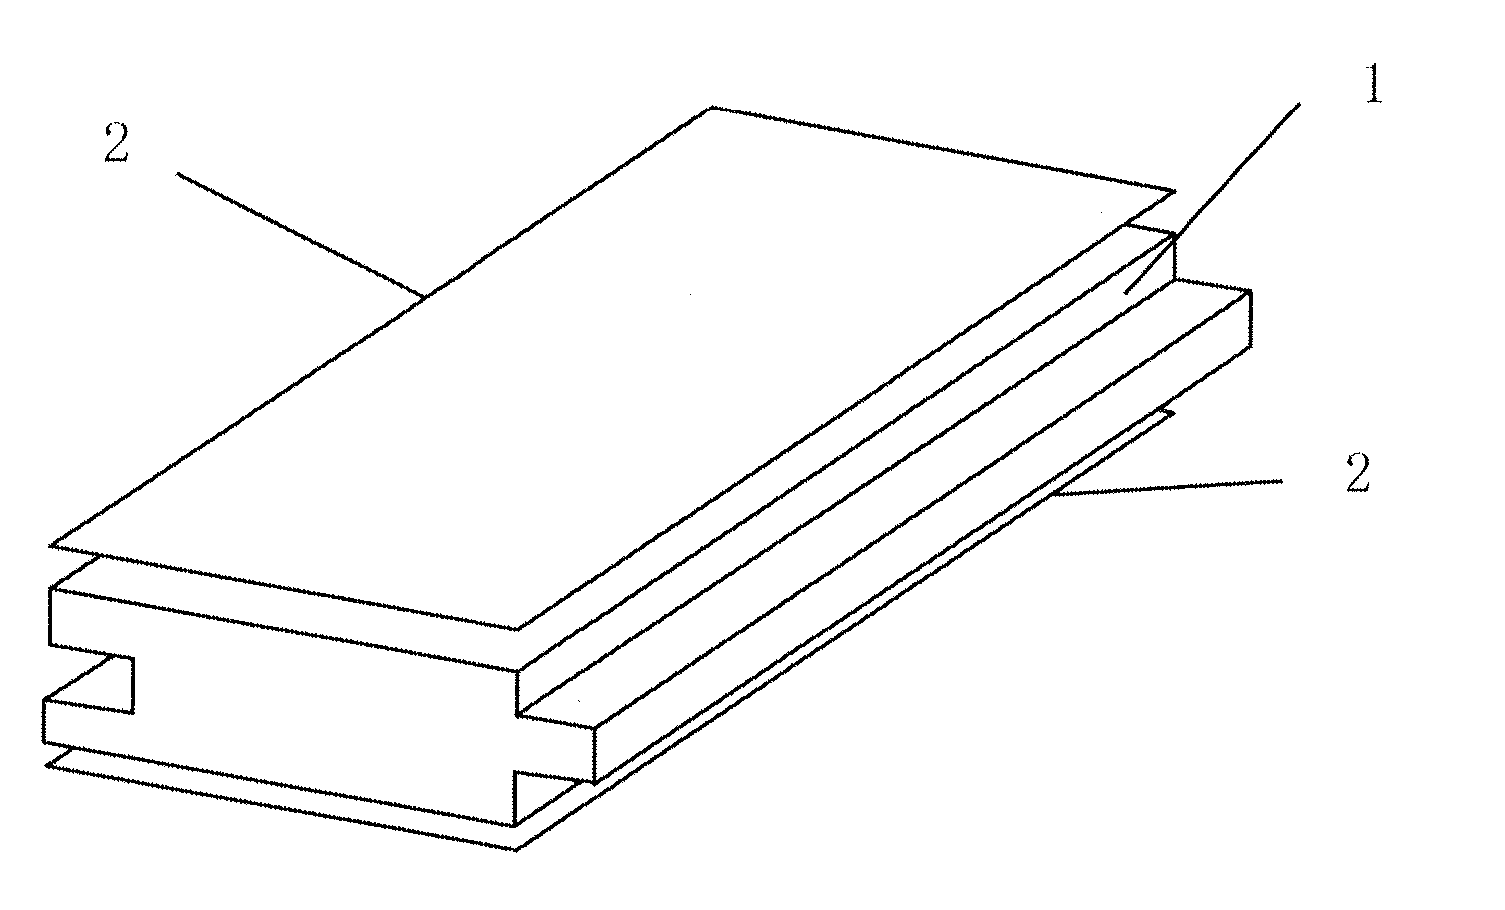 The Method of Manufacturing Aldehyde-free Engineer Wood Floor